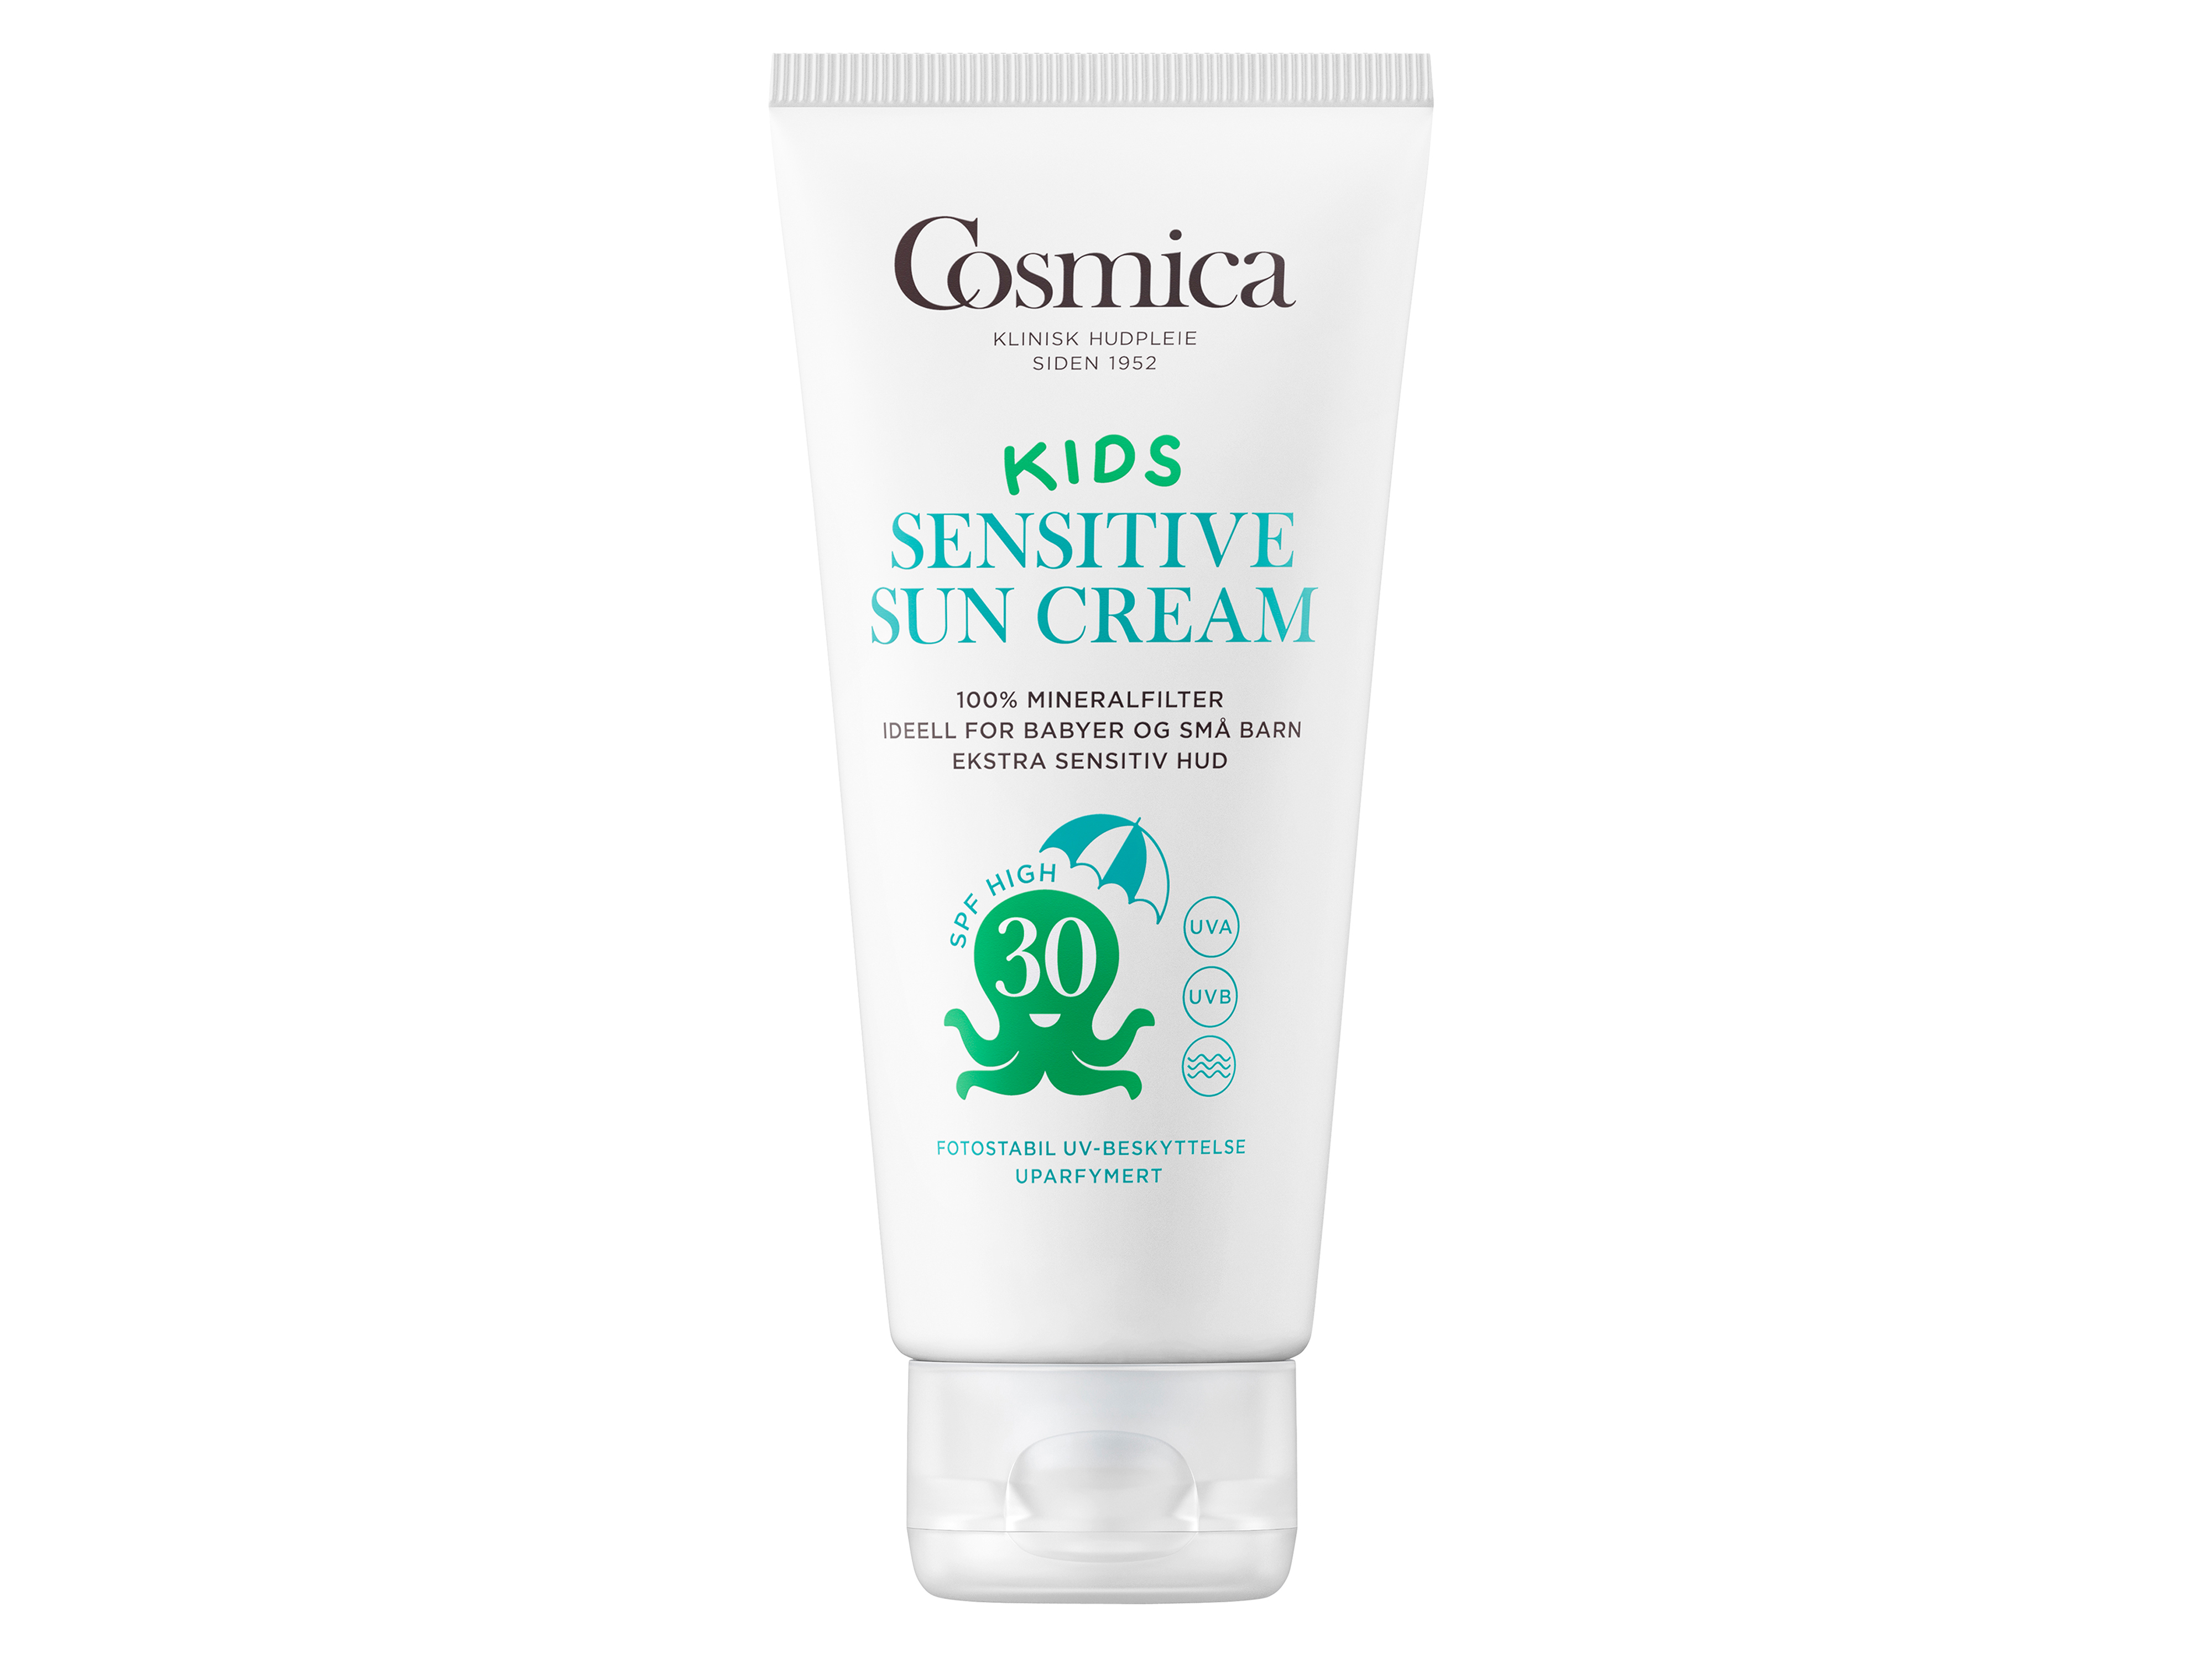 Cosmica Kids Sensitive Sun Cream, SPF 30, 100 ml